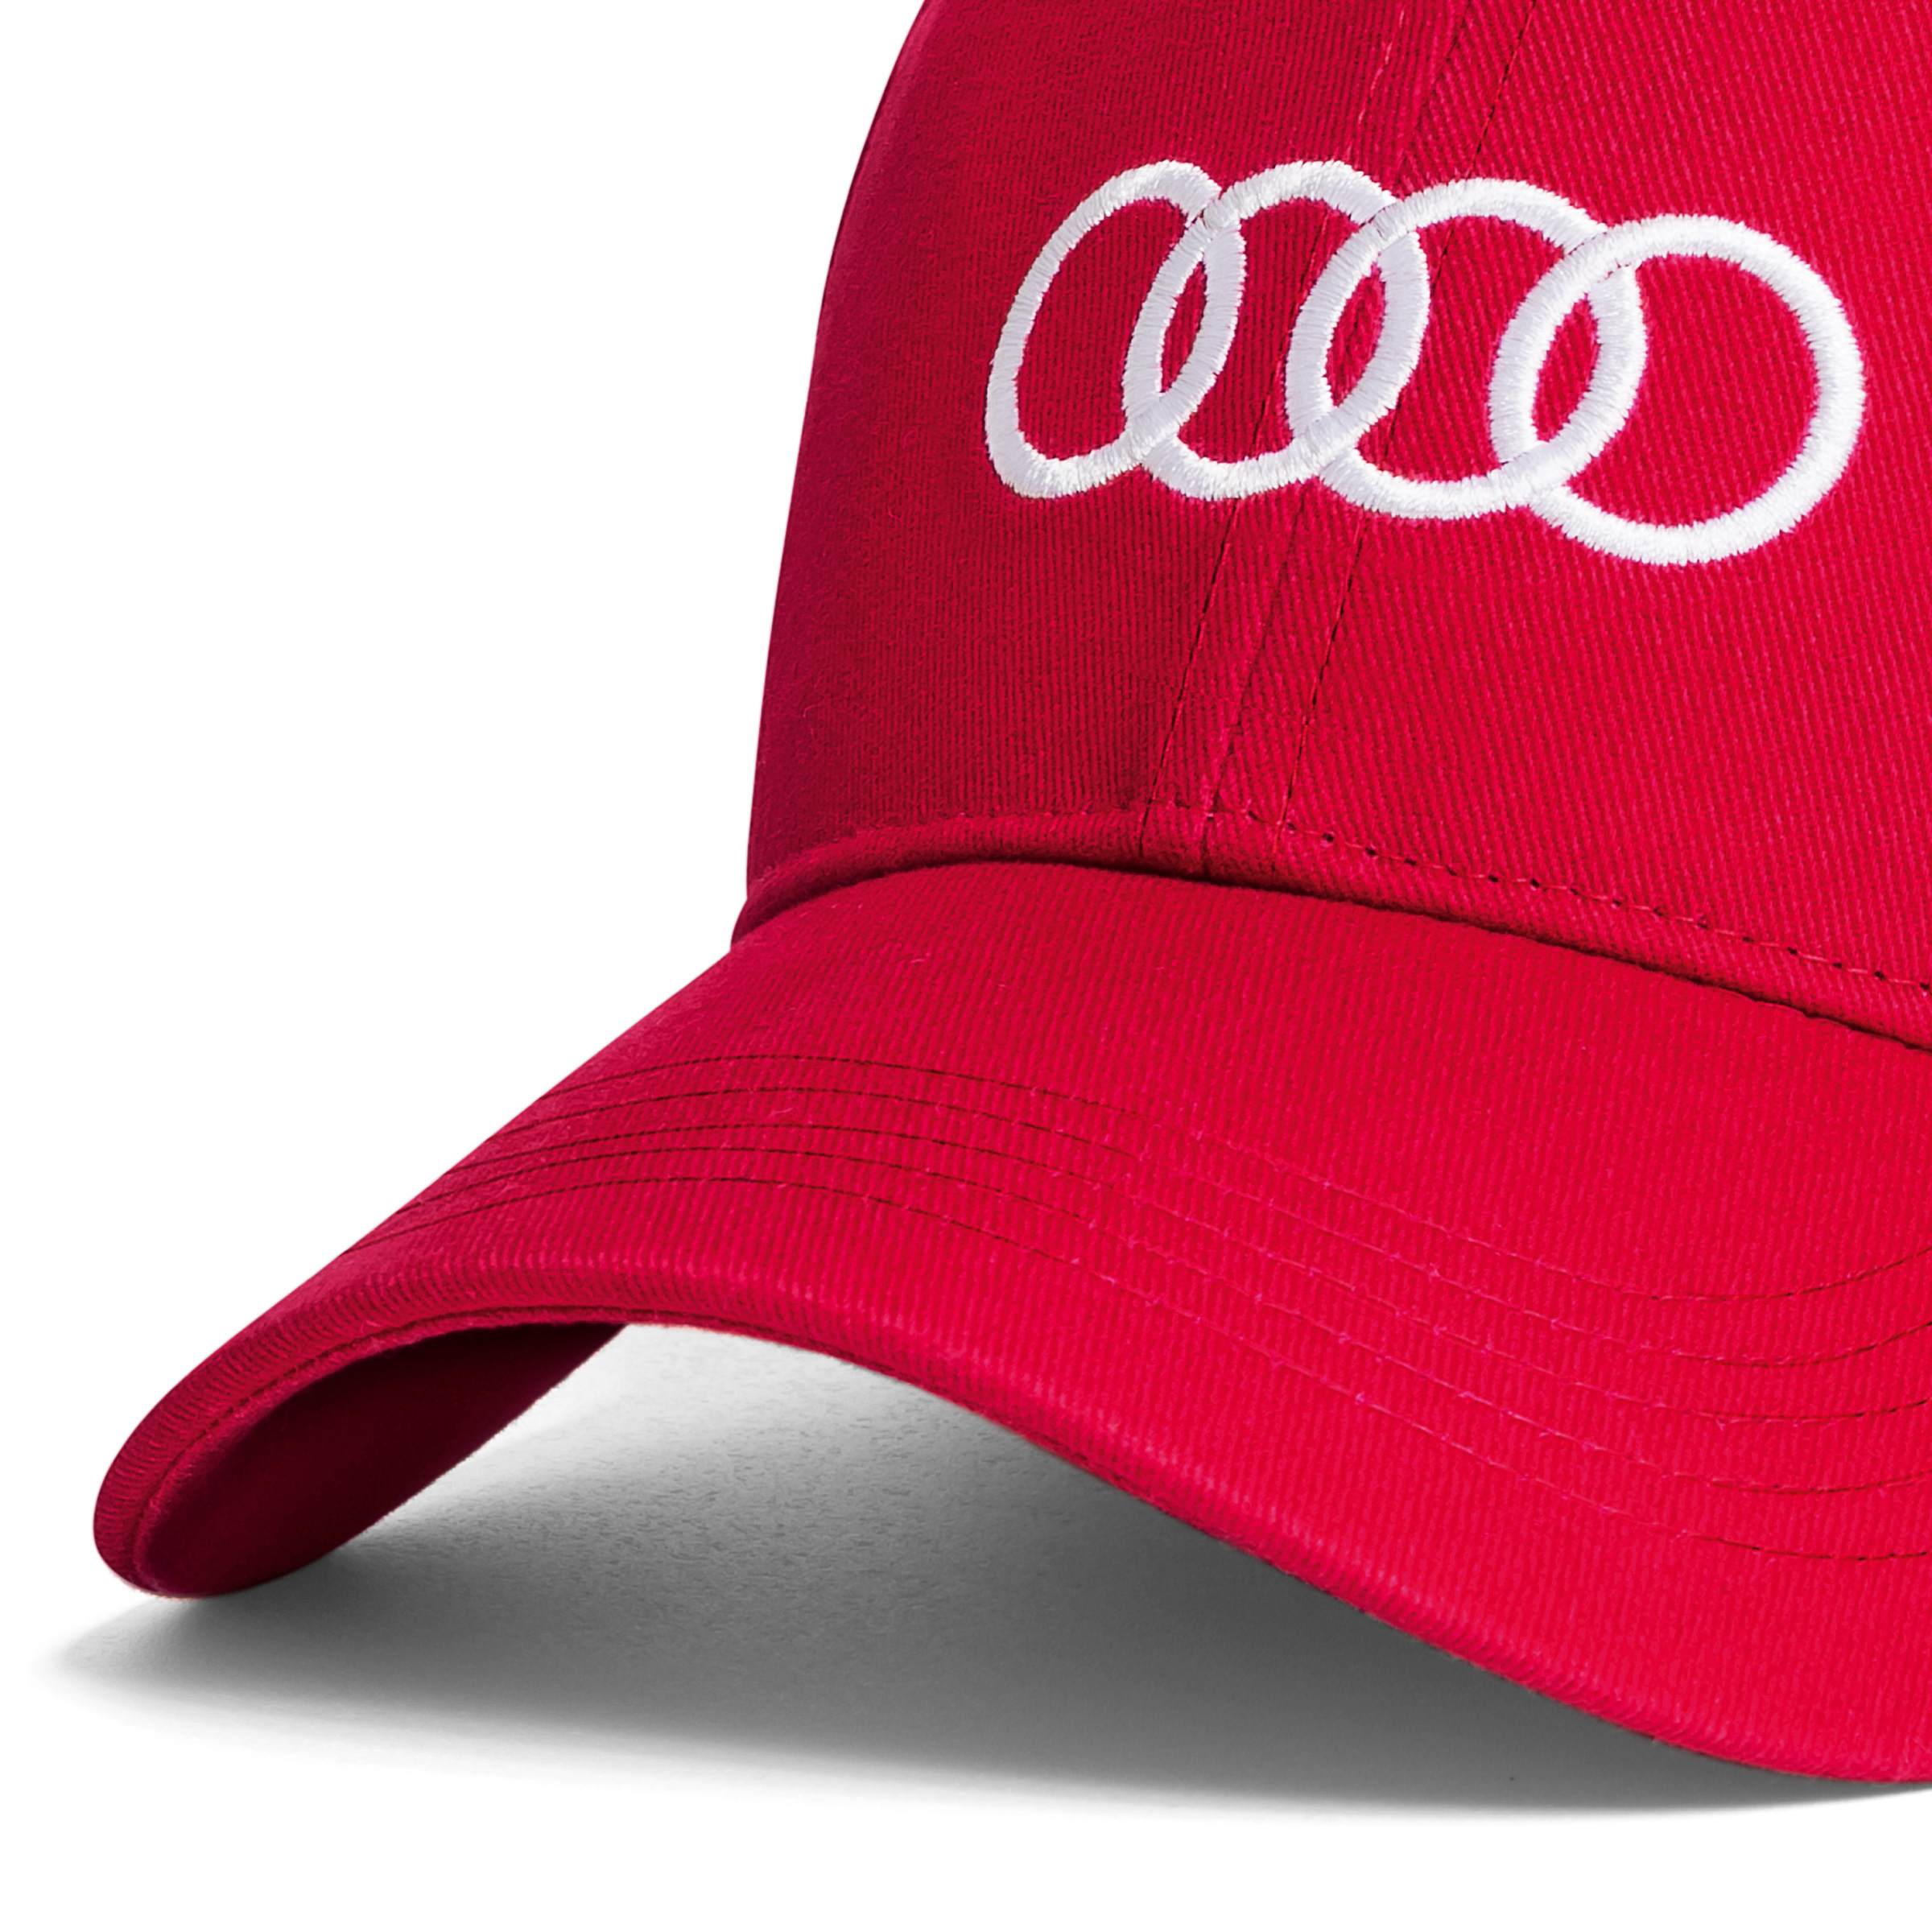 Original Audi Cap Baseballkappe Baseballcap Basecap Mütze rot 